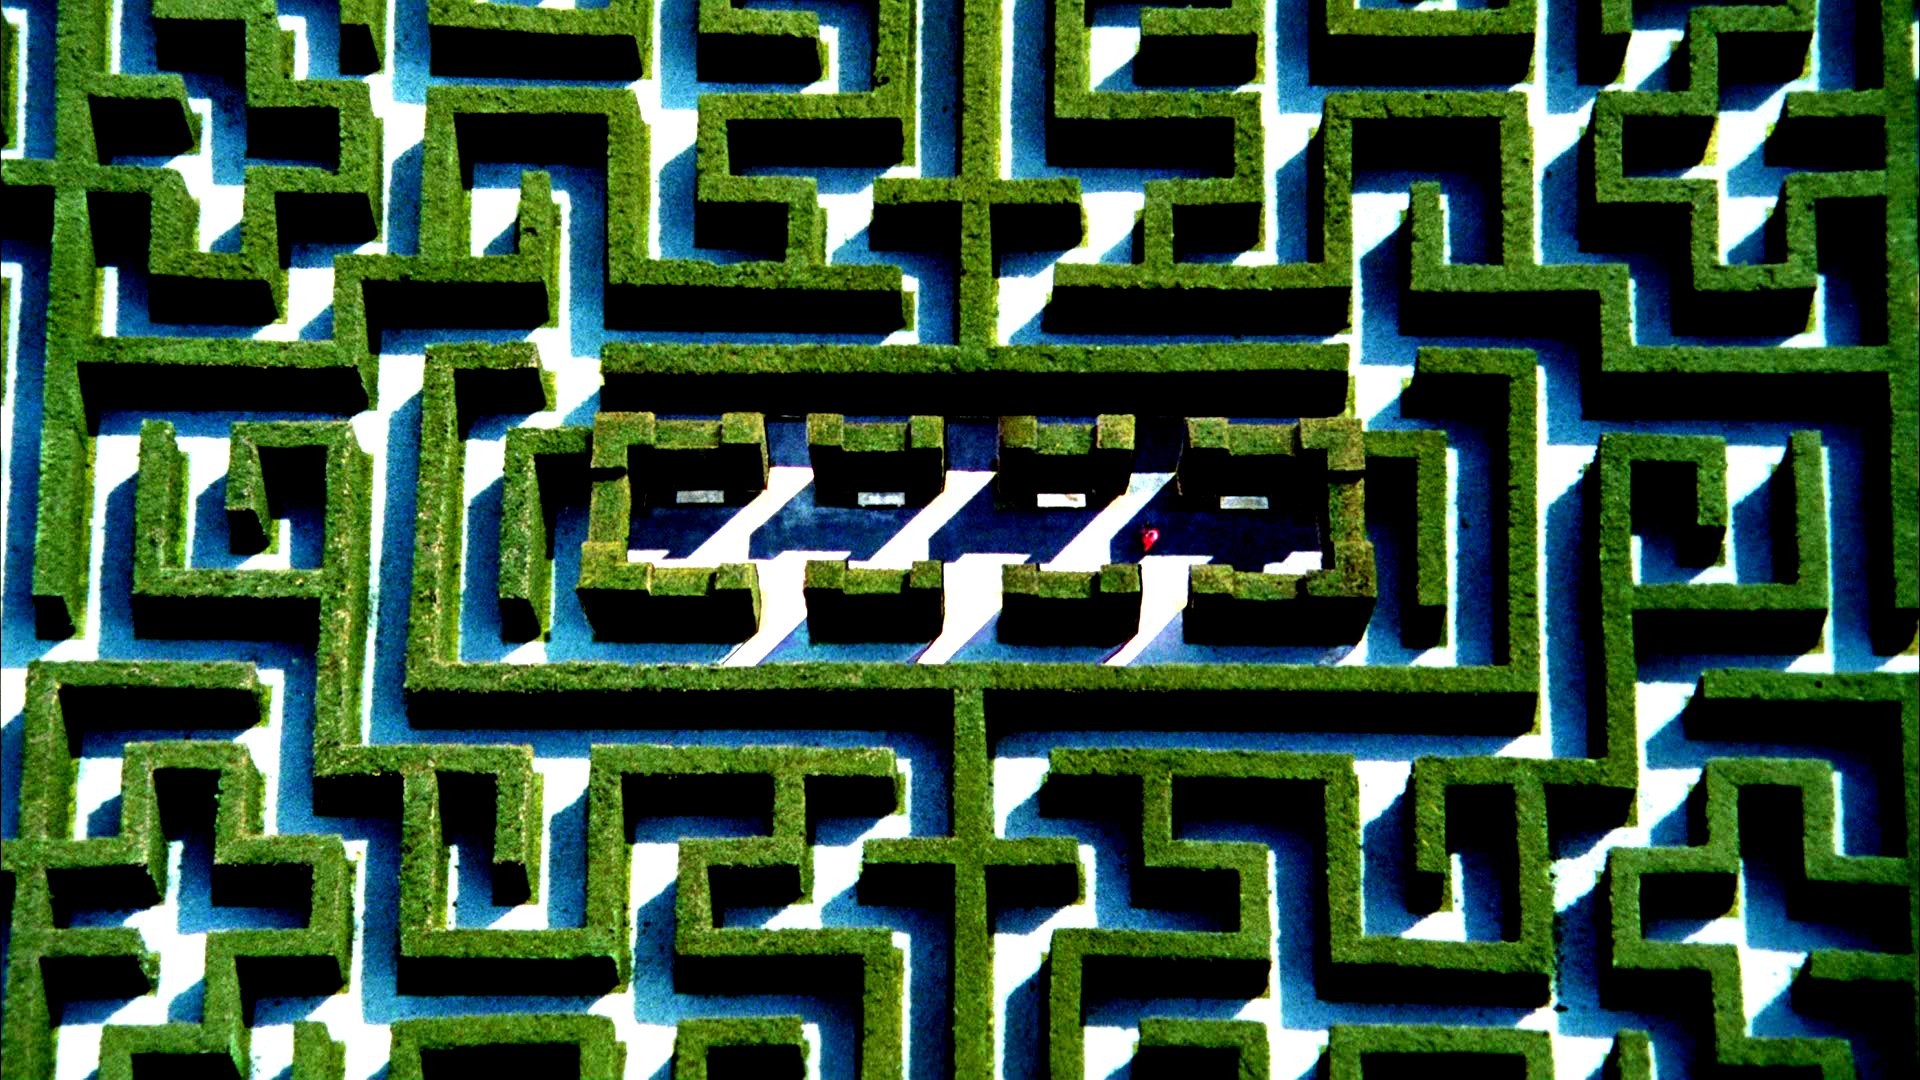 1920x1080 THE SHINING horror thriller dark movie film classic psychedelic maze  pattern garden wallpaper |  | 253378 | WallpaperUP